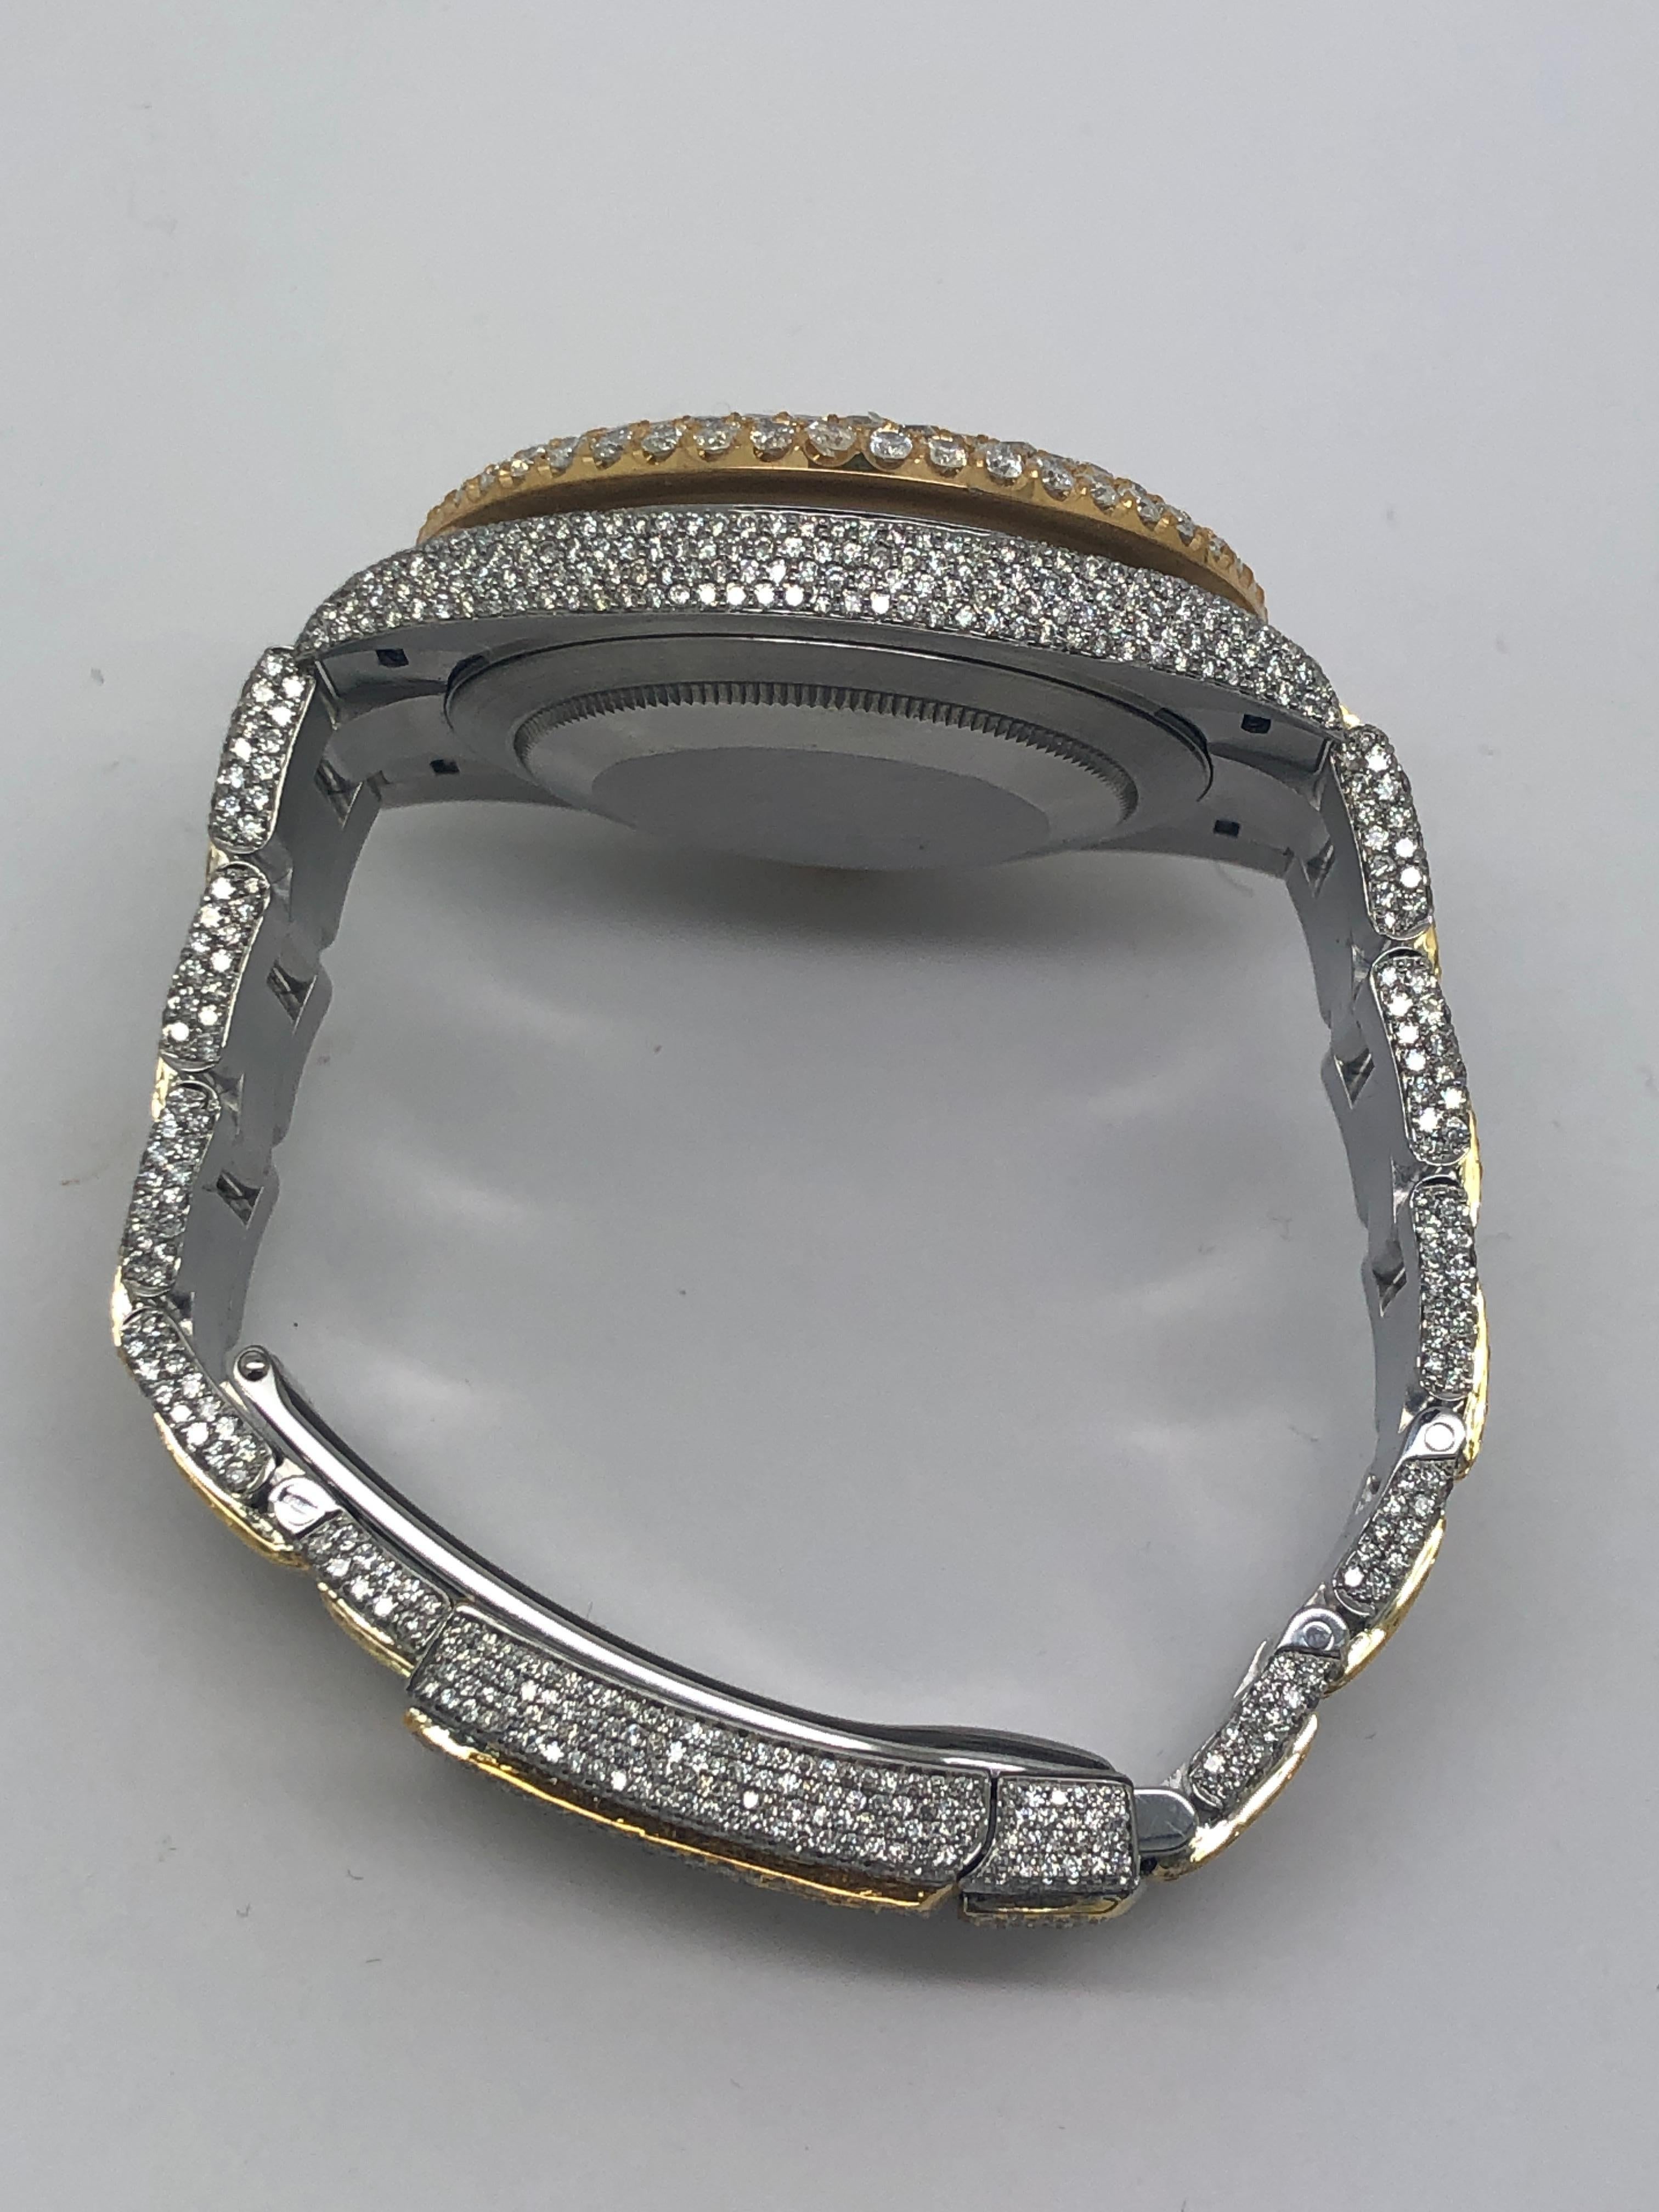 Custom Iced Out Emerald Cut Diamonds Rolex Datejust Wrist Watch For Sale 3